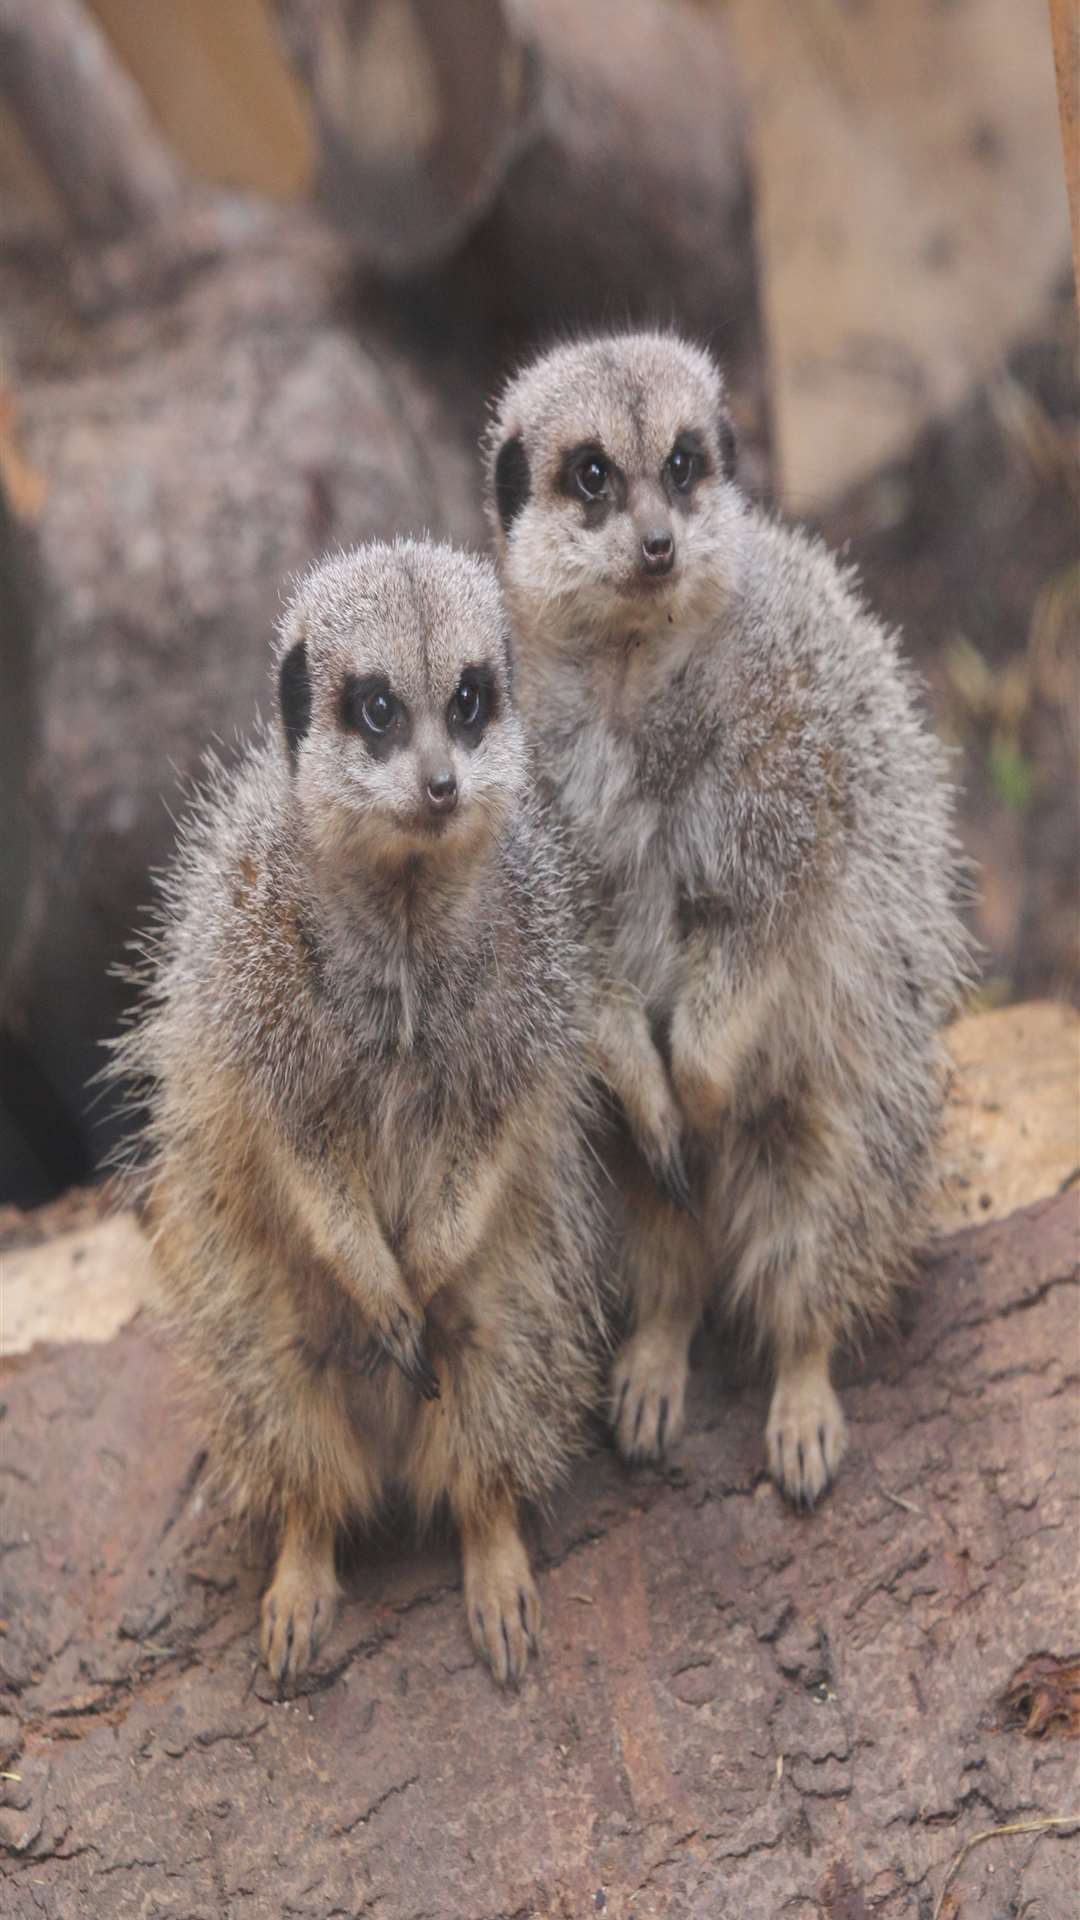 These meerkats face an uncertain future.